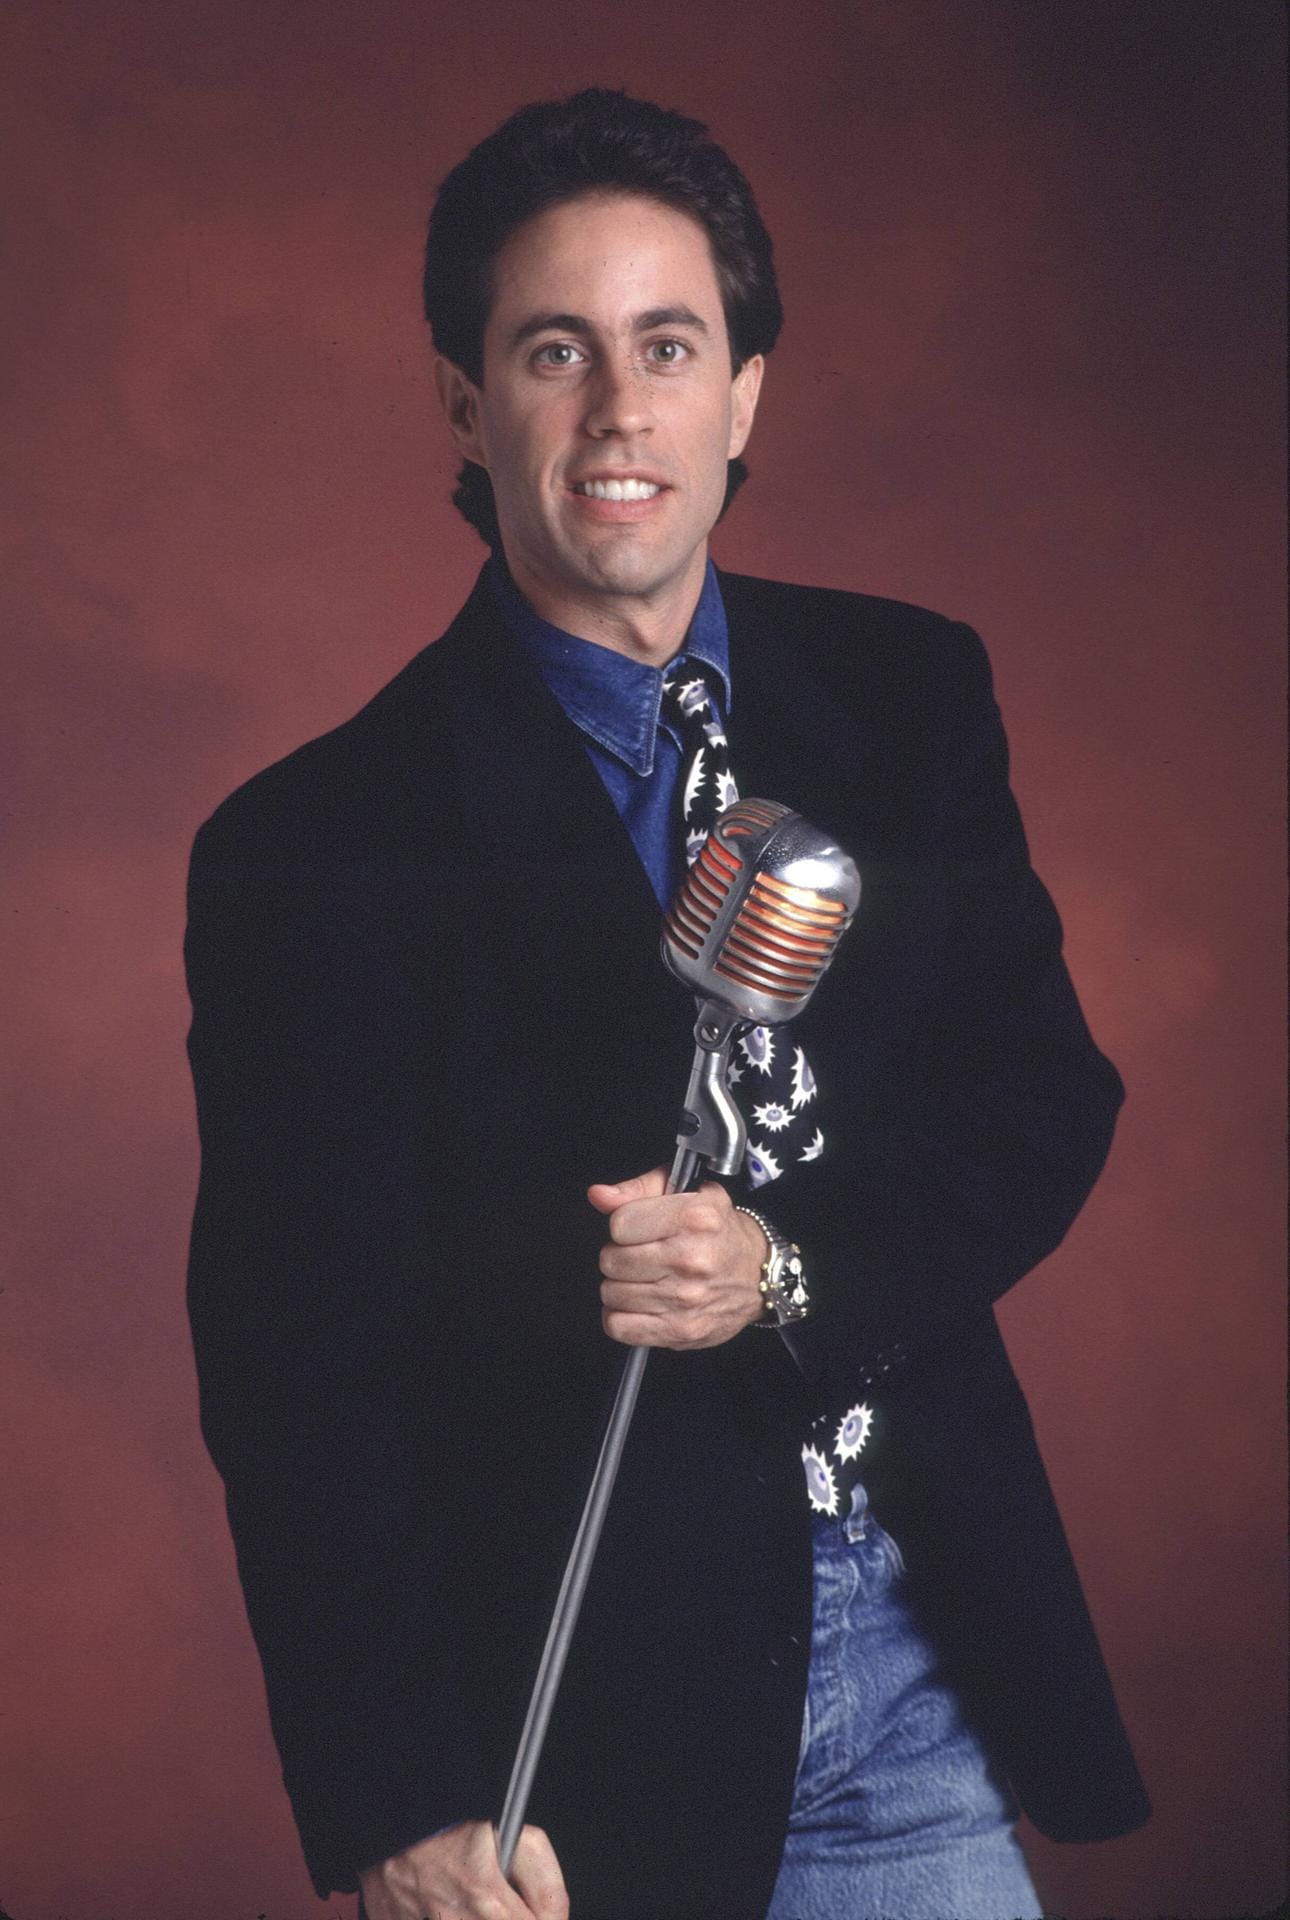 Jerry Seinfeld spielte Jerry Seinfeld, einen Stand-up-Komiker.